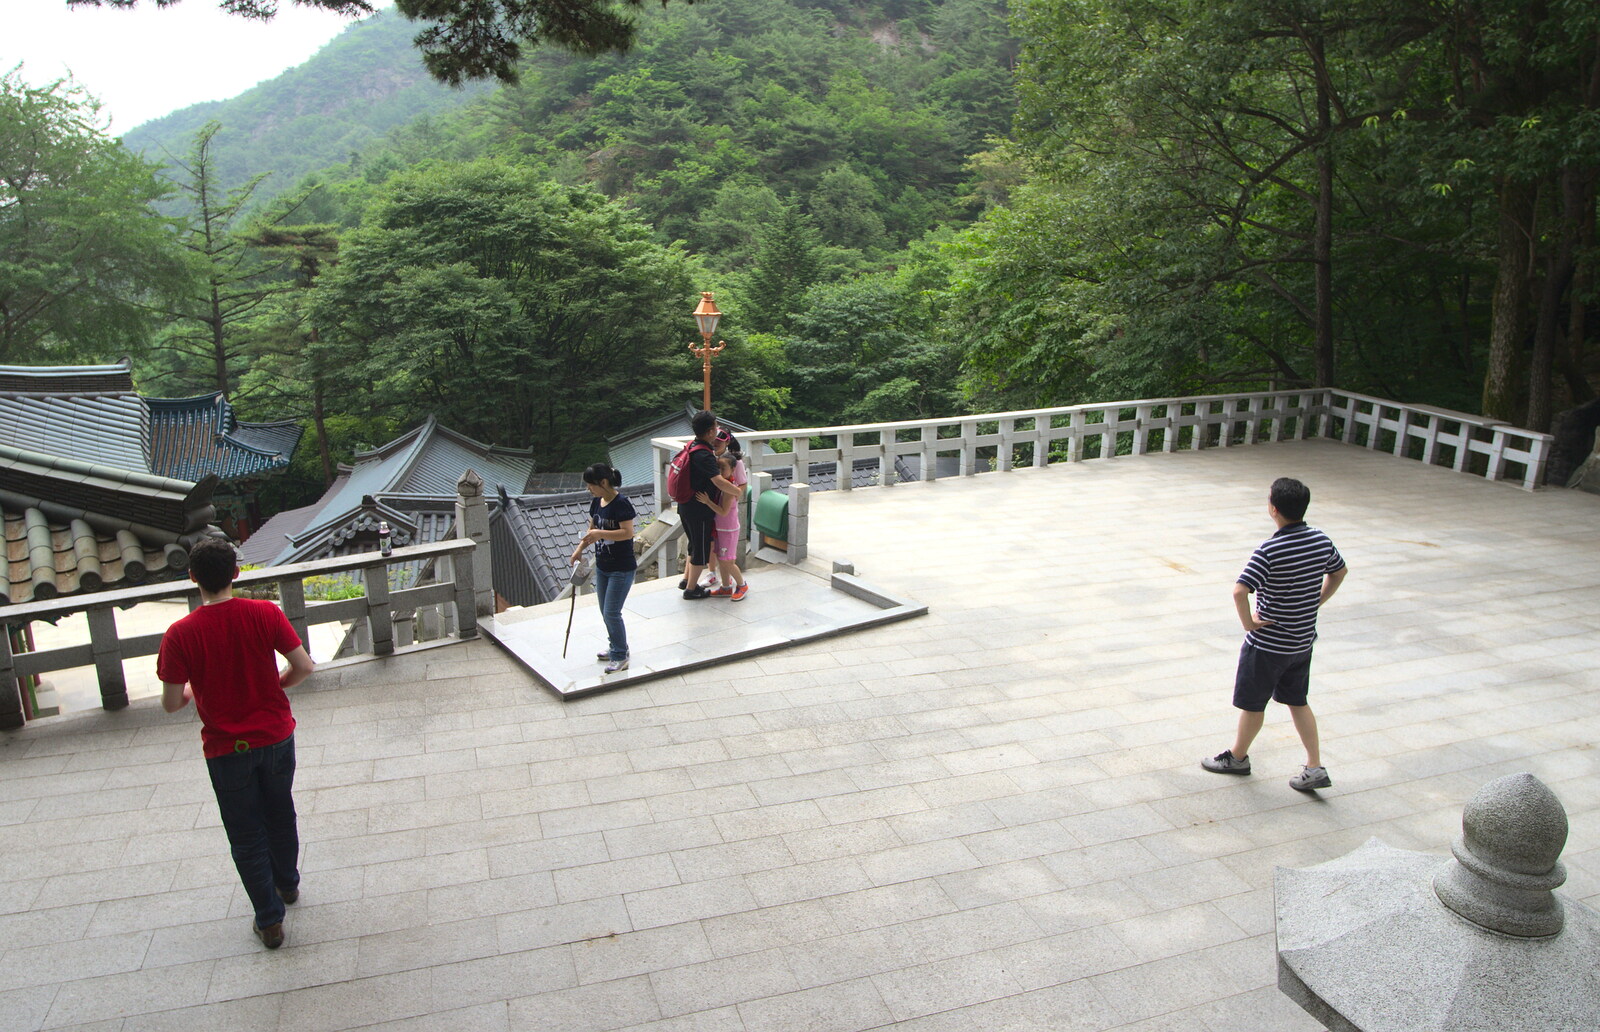 Surveying the scene from Working at Samsung, and Geumosan Mountain, Gumi, Gyeongsangbuk-do, Korea - 24th June 2012